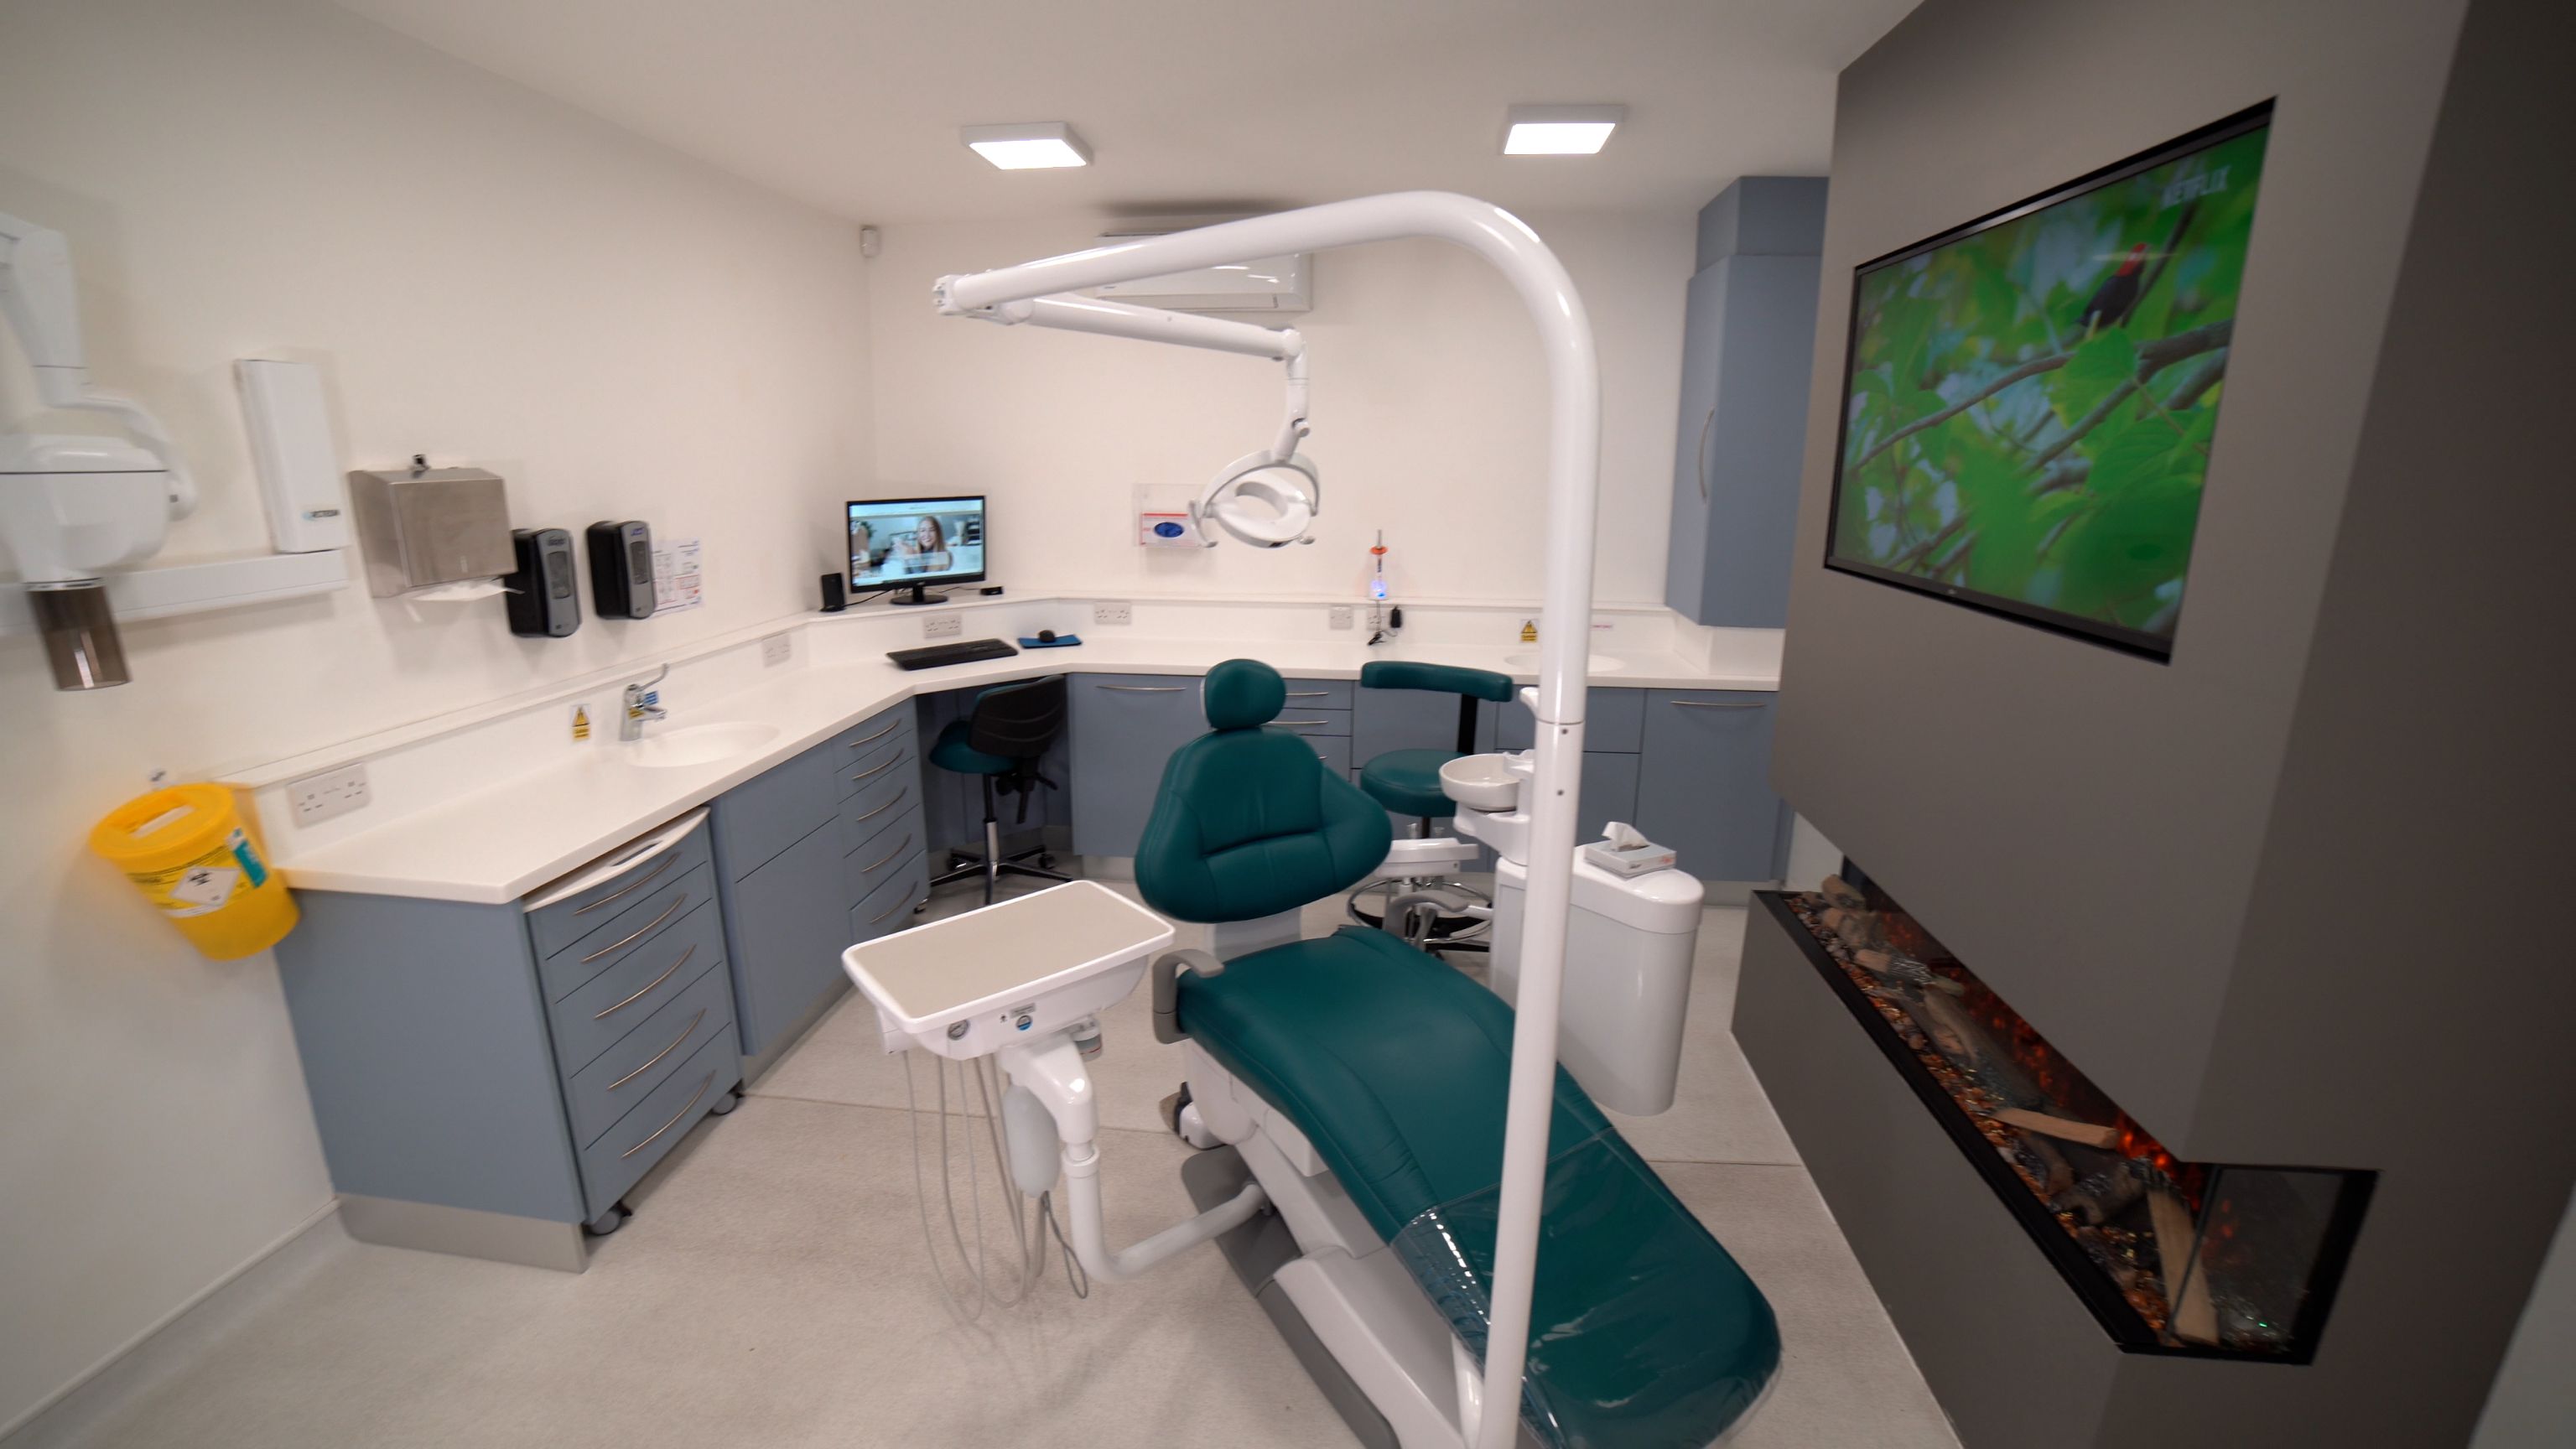 Root canal treatment near you at Riyo dental Manchester